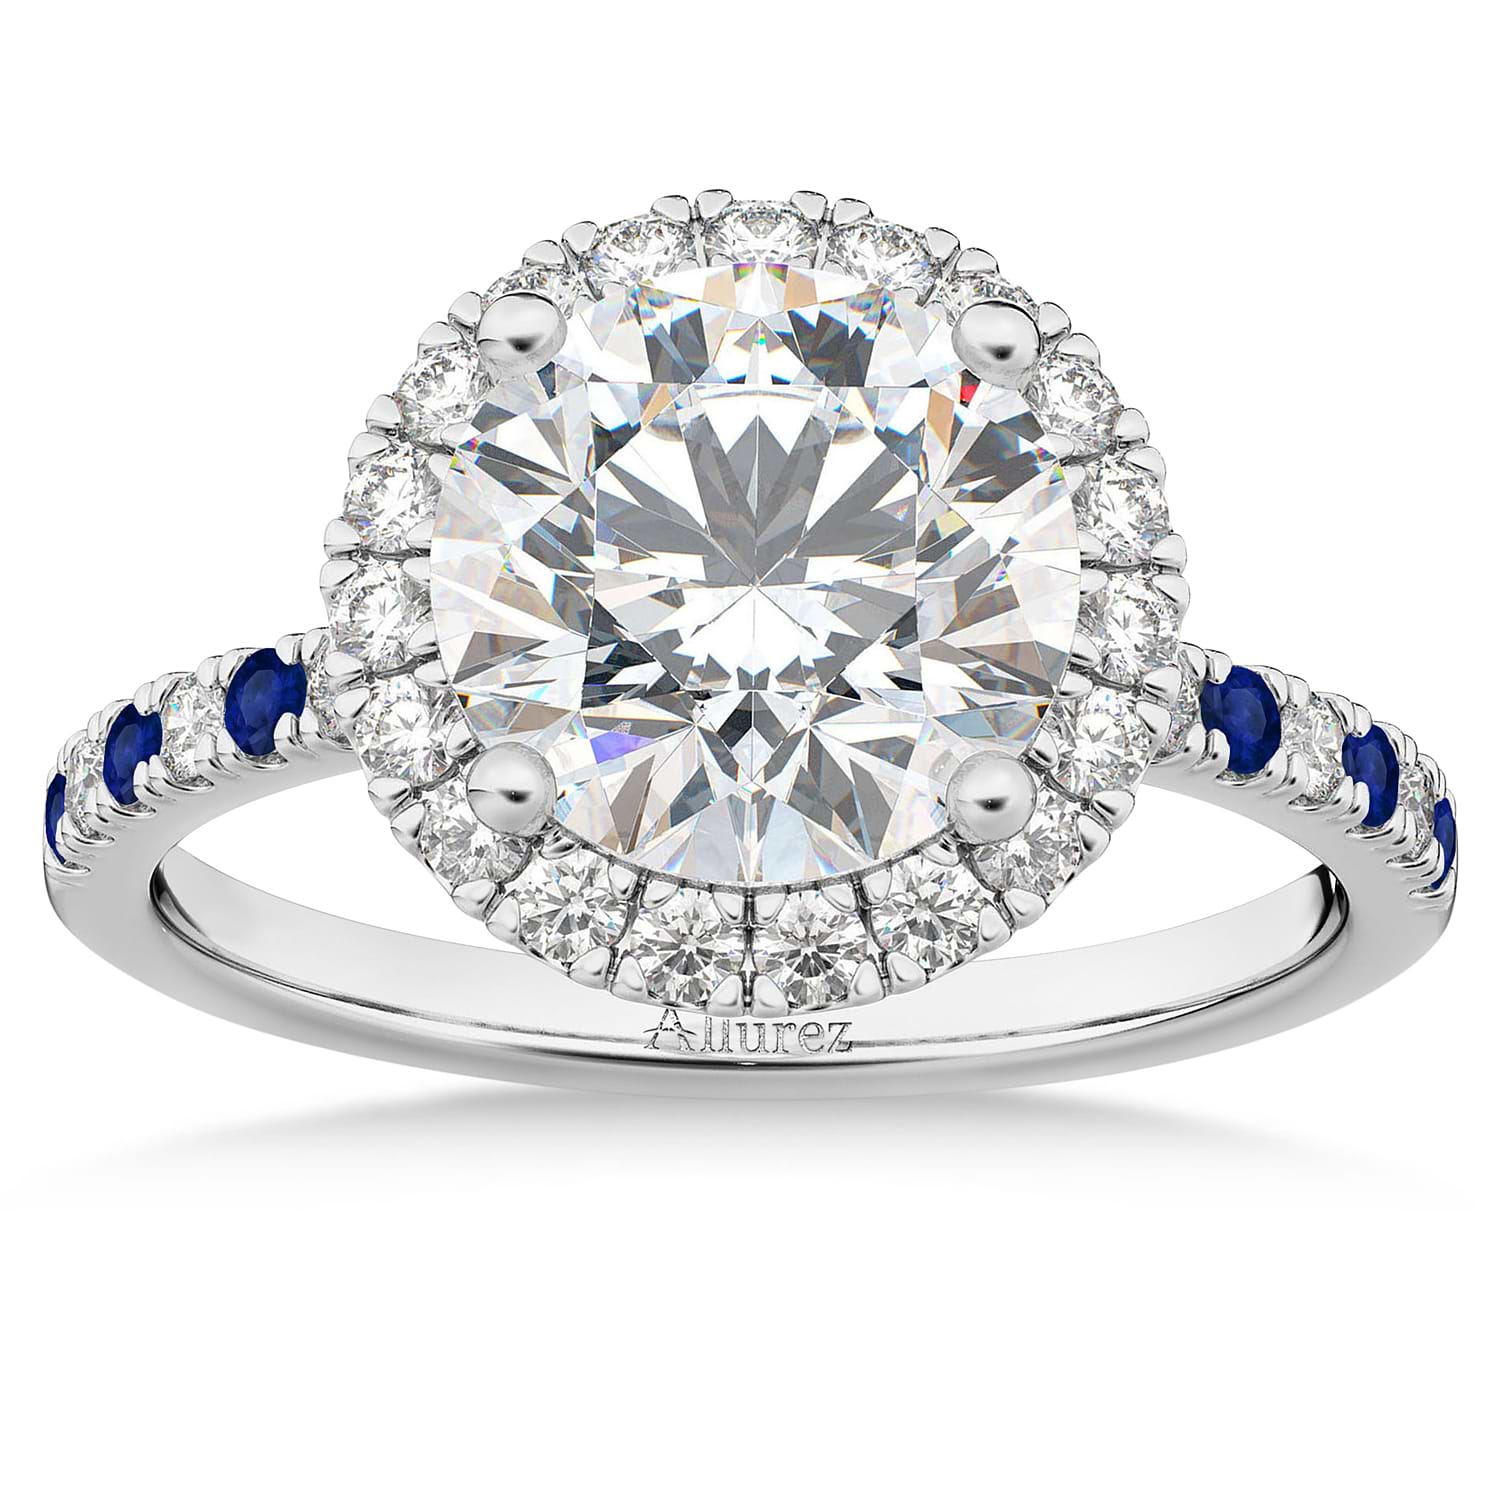 Blue Sapphire & Diamond Halo Engagement Ring Setting 14K White Gold (0.50ct)